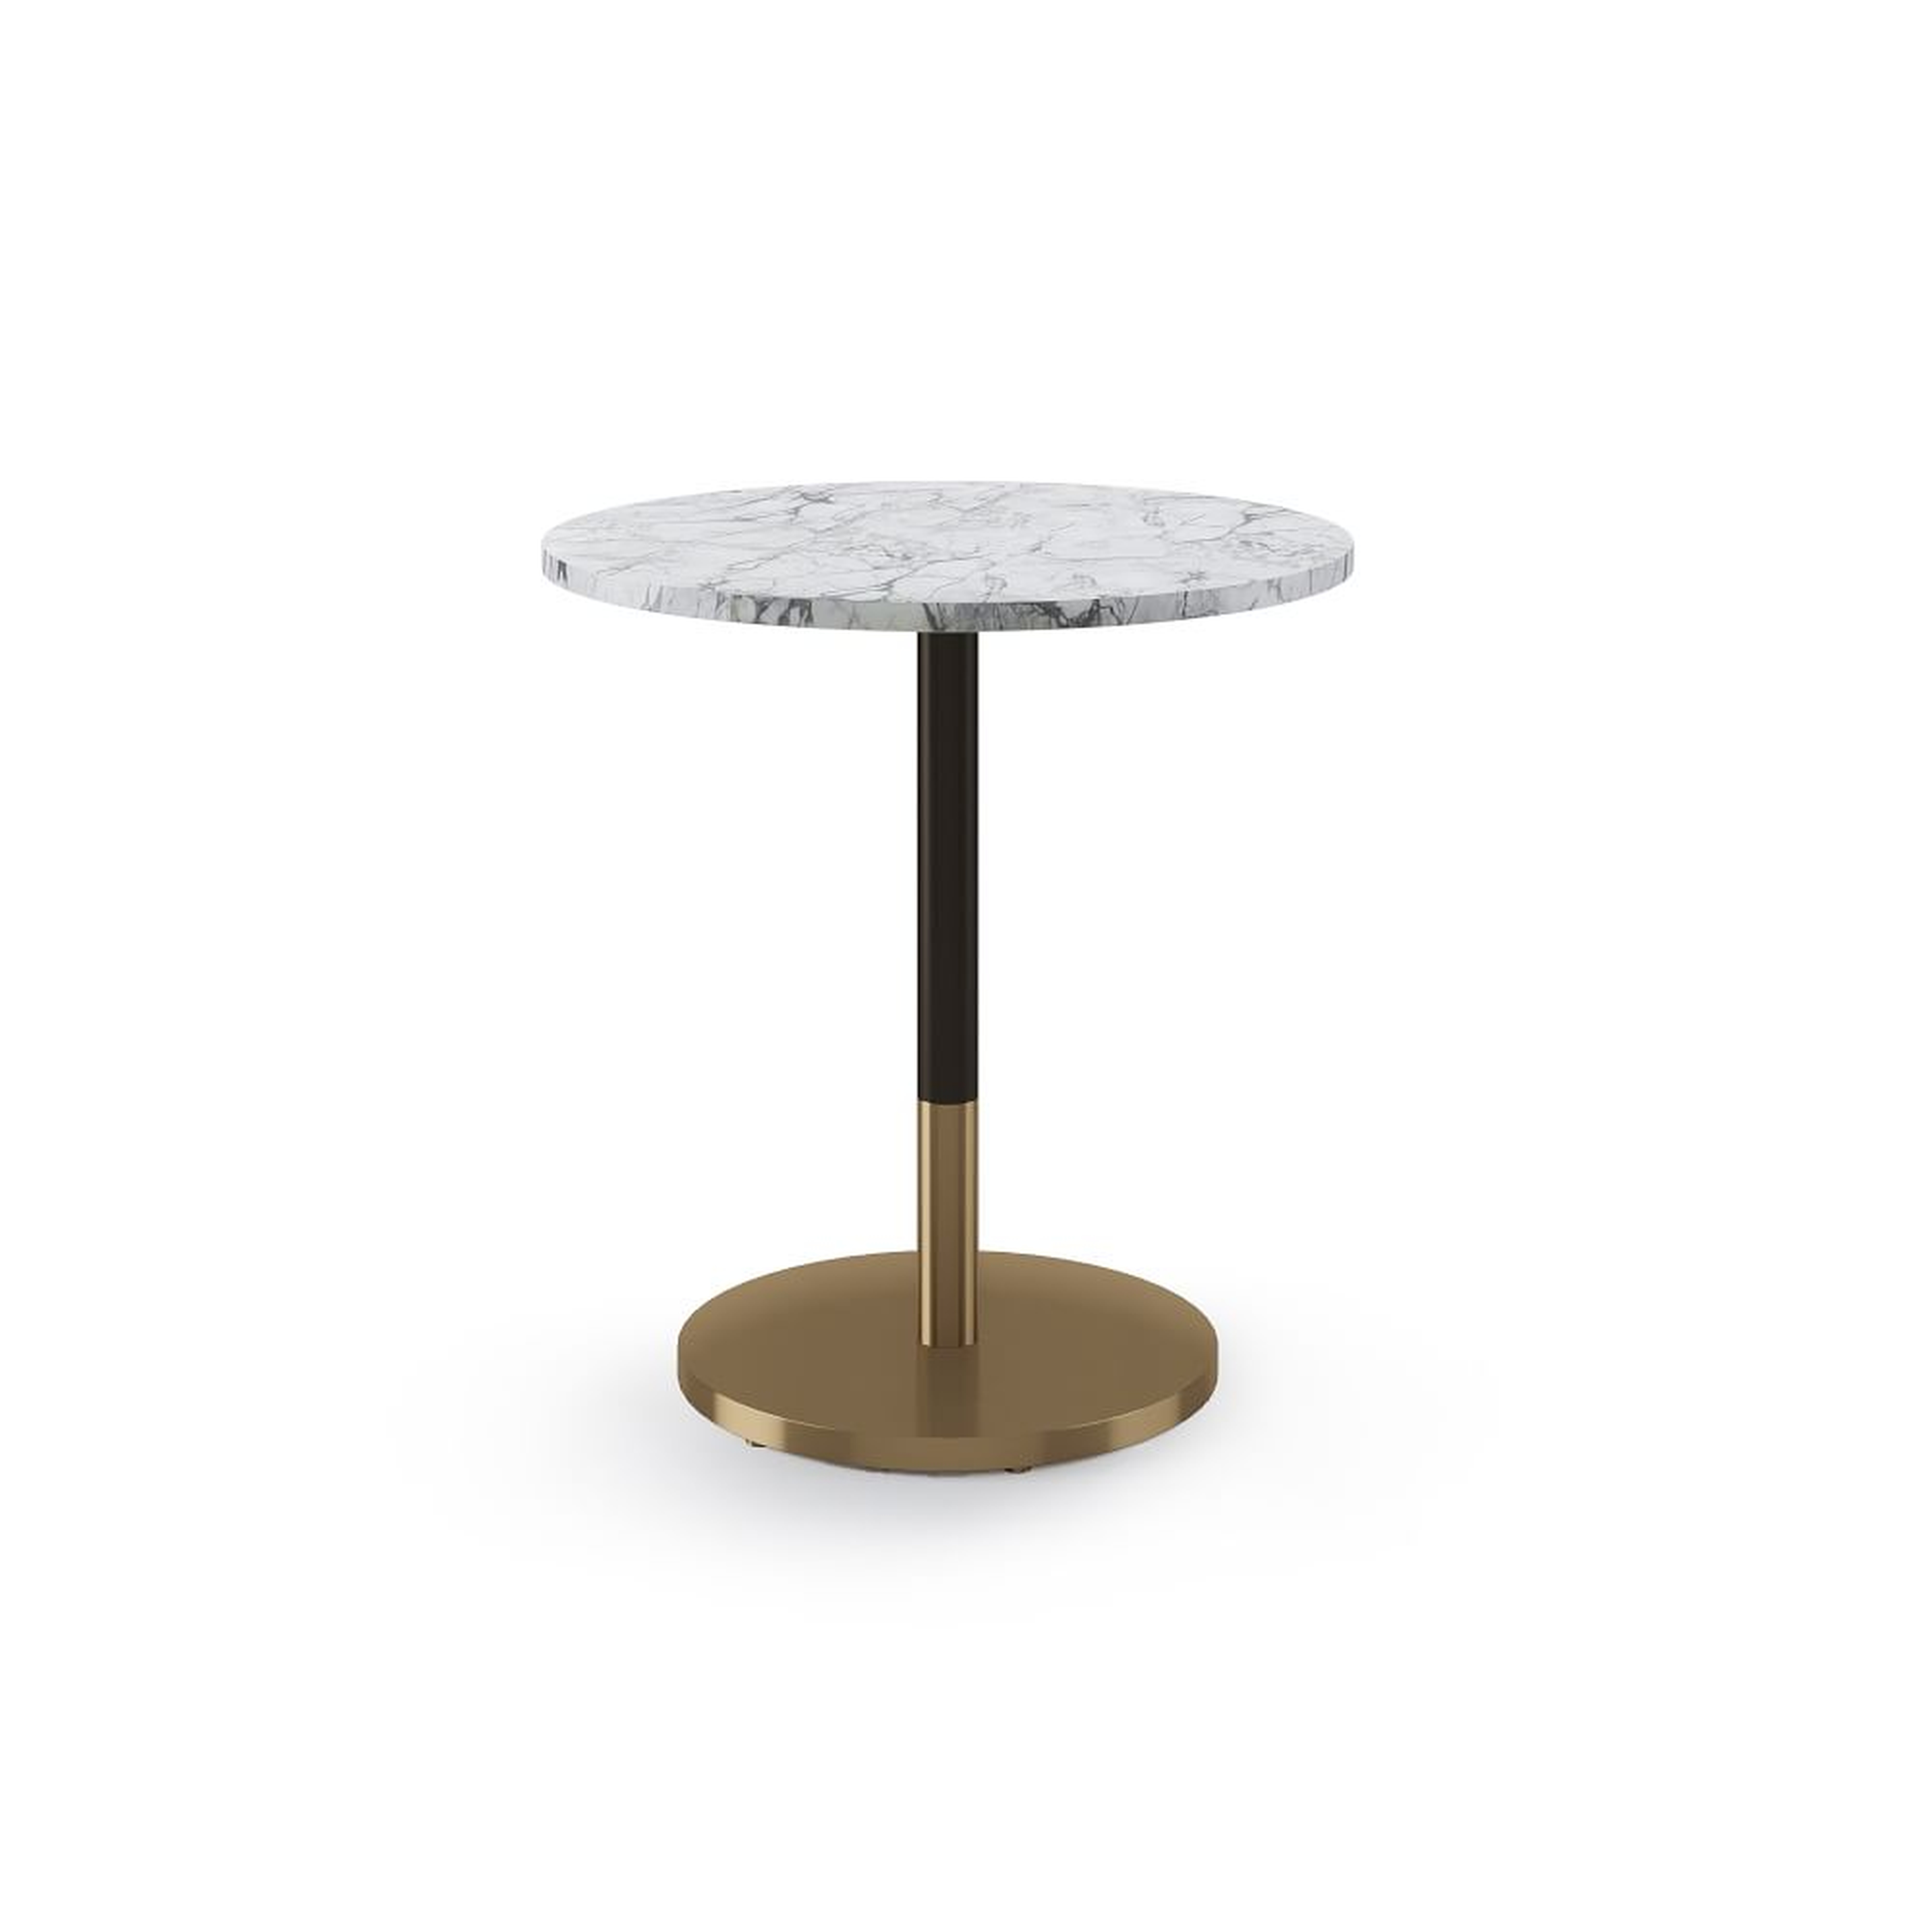 Restaurant Table, Top 30" Round, White Faux Marble, Dining Ht Orbit Base, Bronze/Brass - West Elm